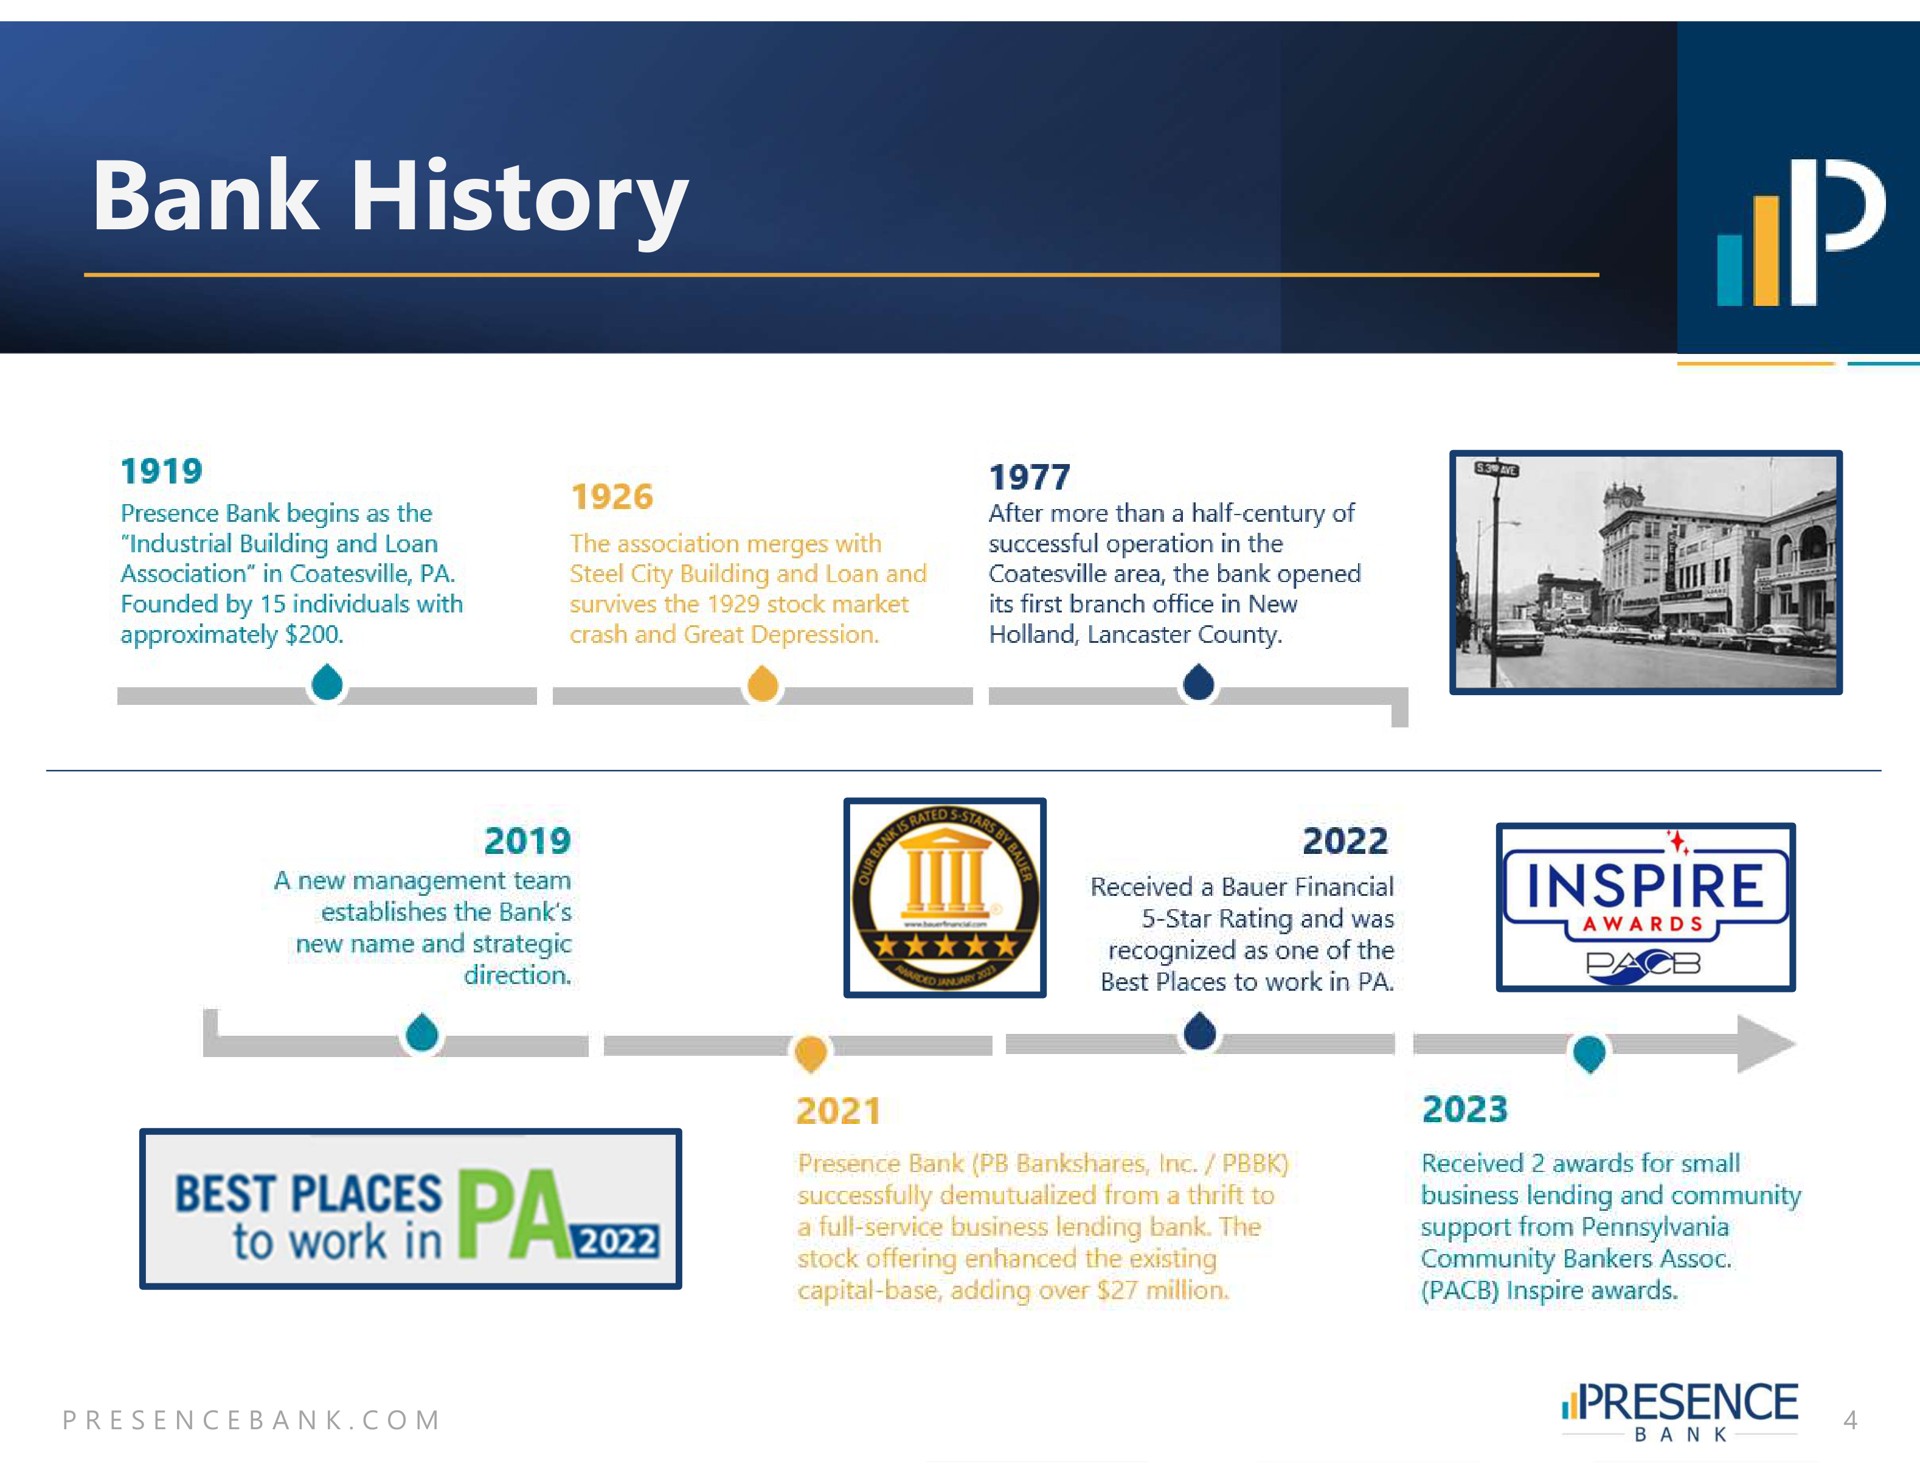 bank history | PB Bankshares